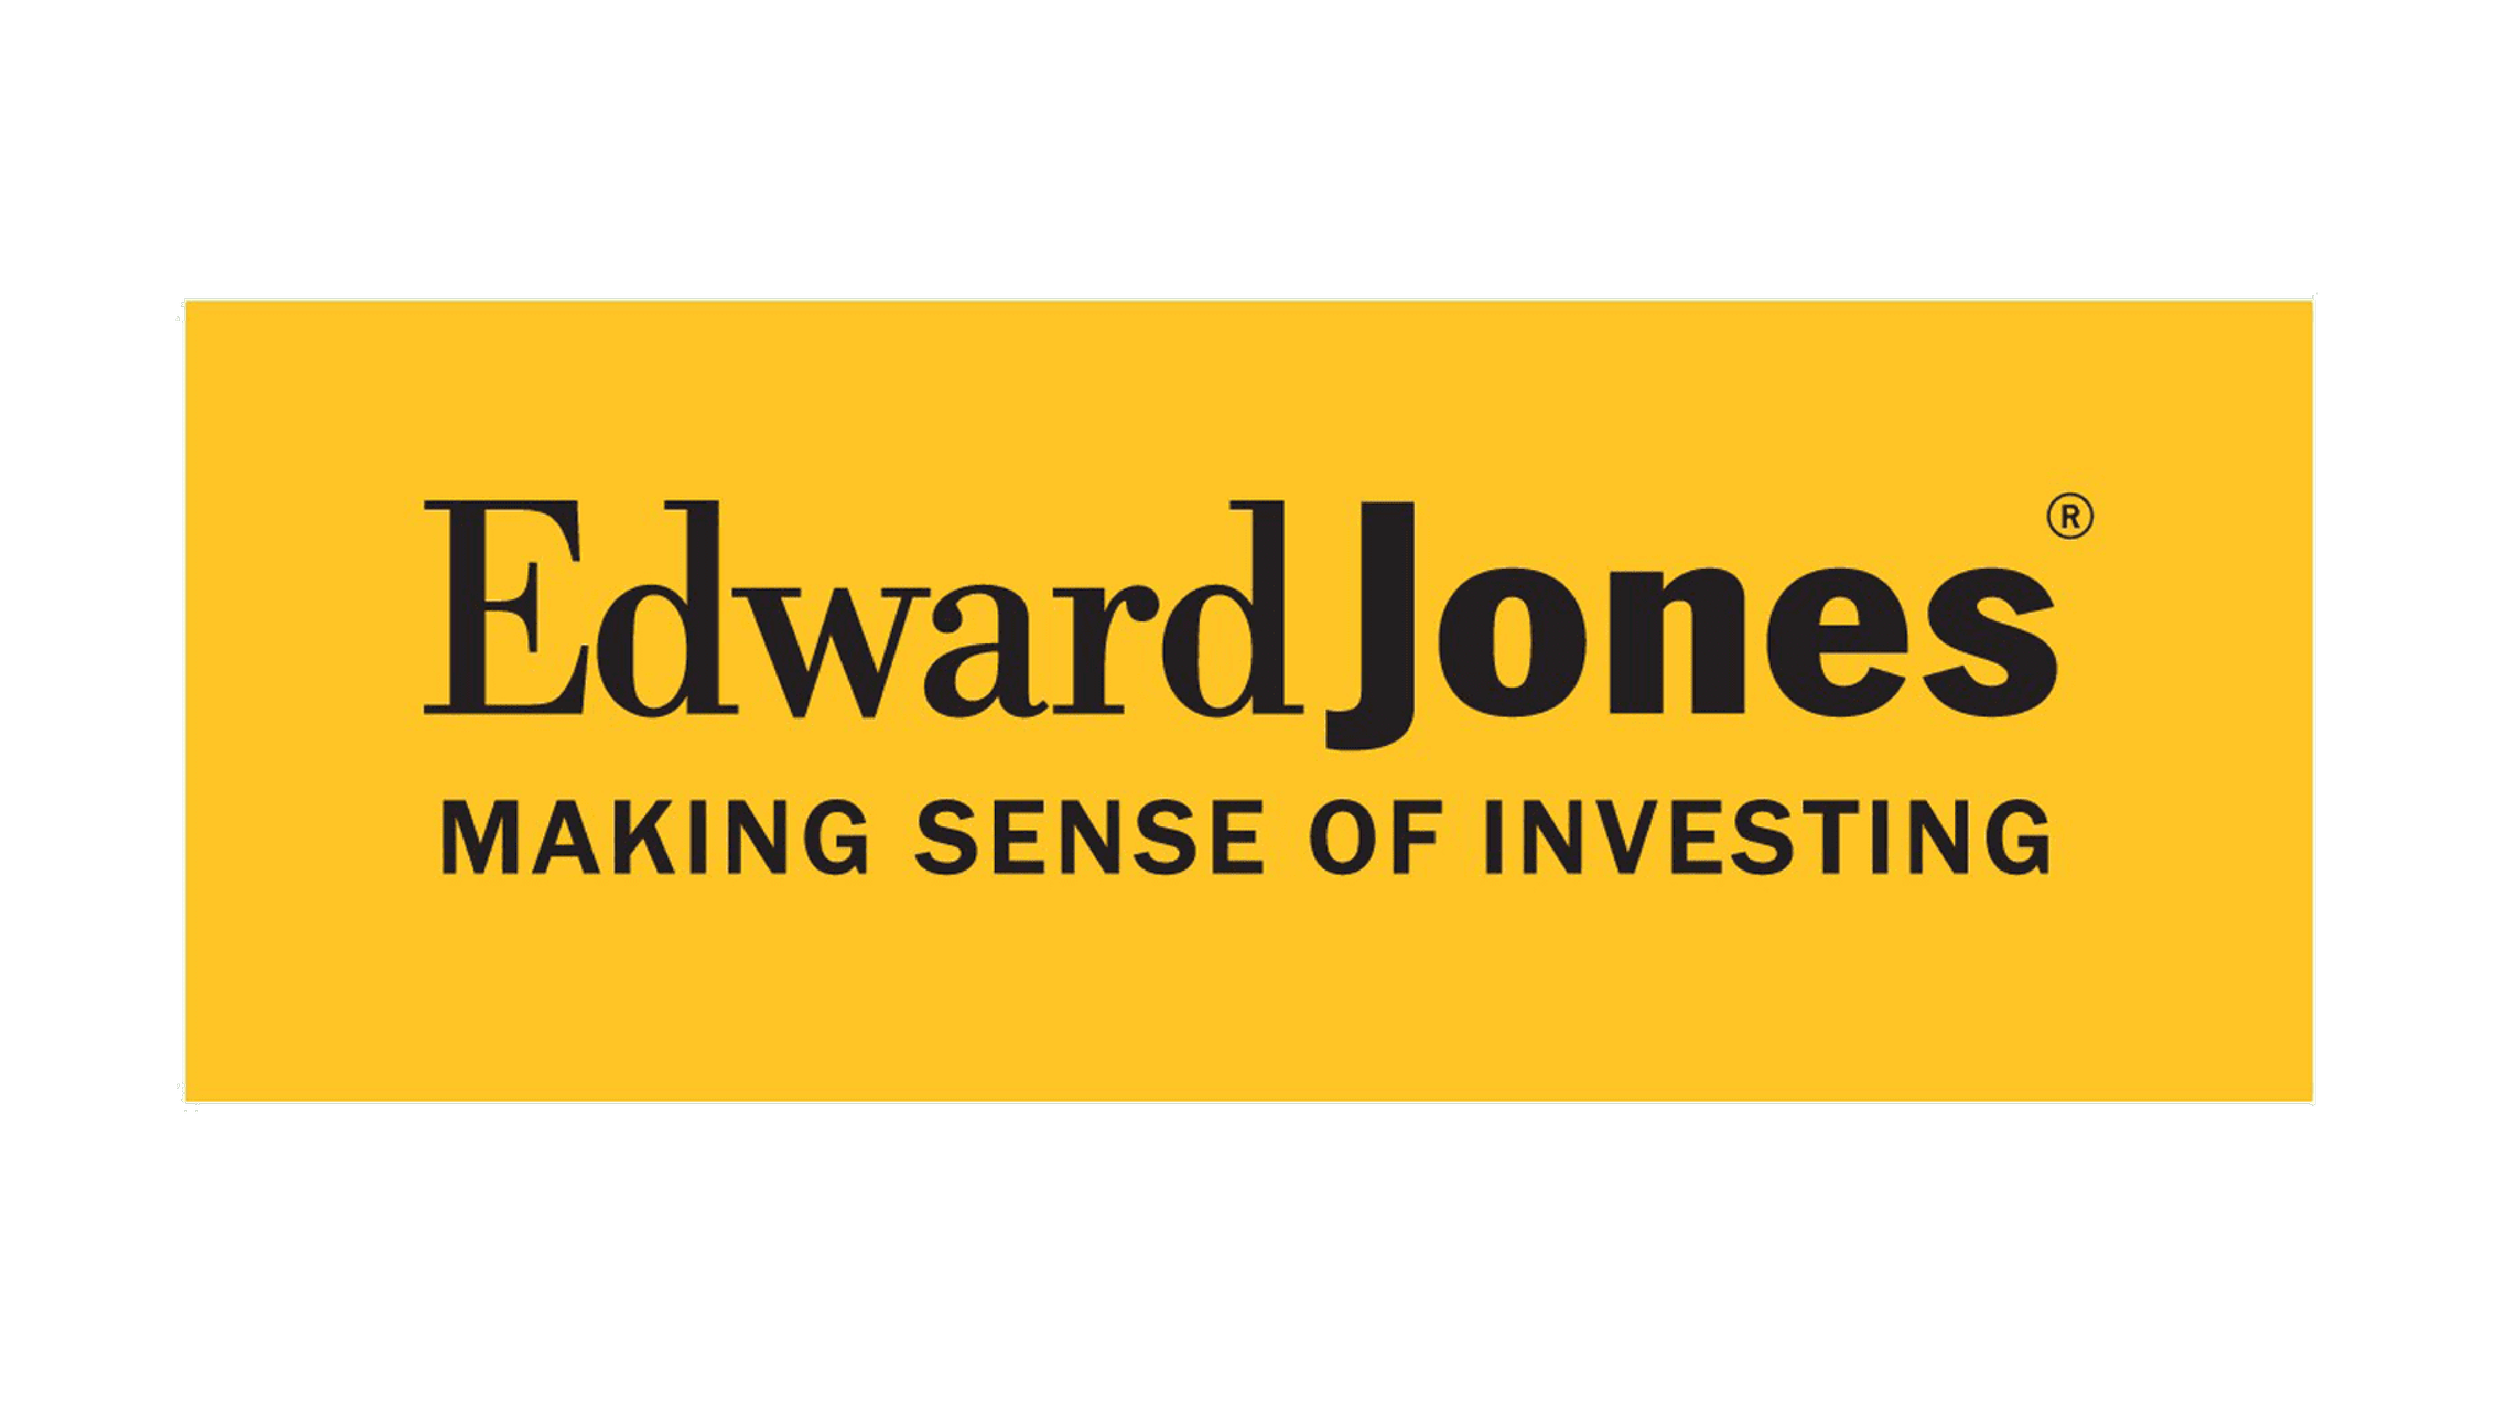 Edward-Jones-logo.png